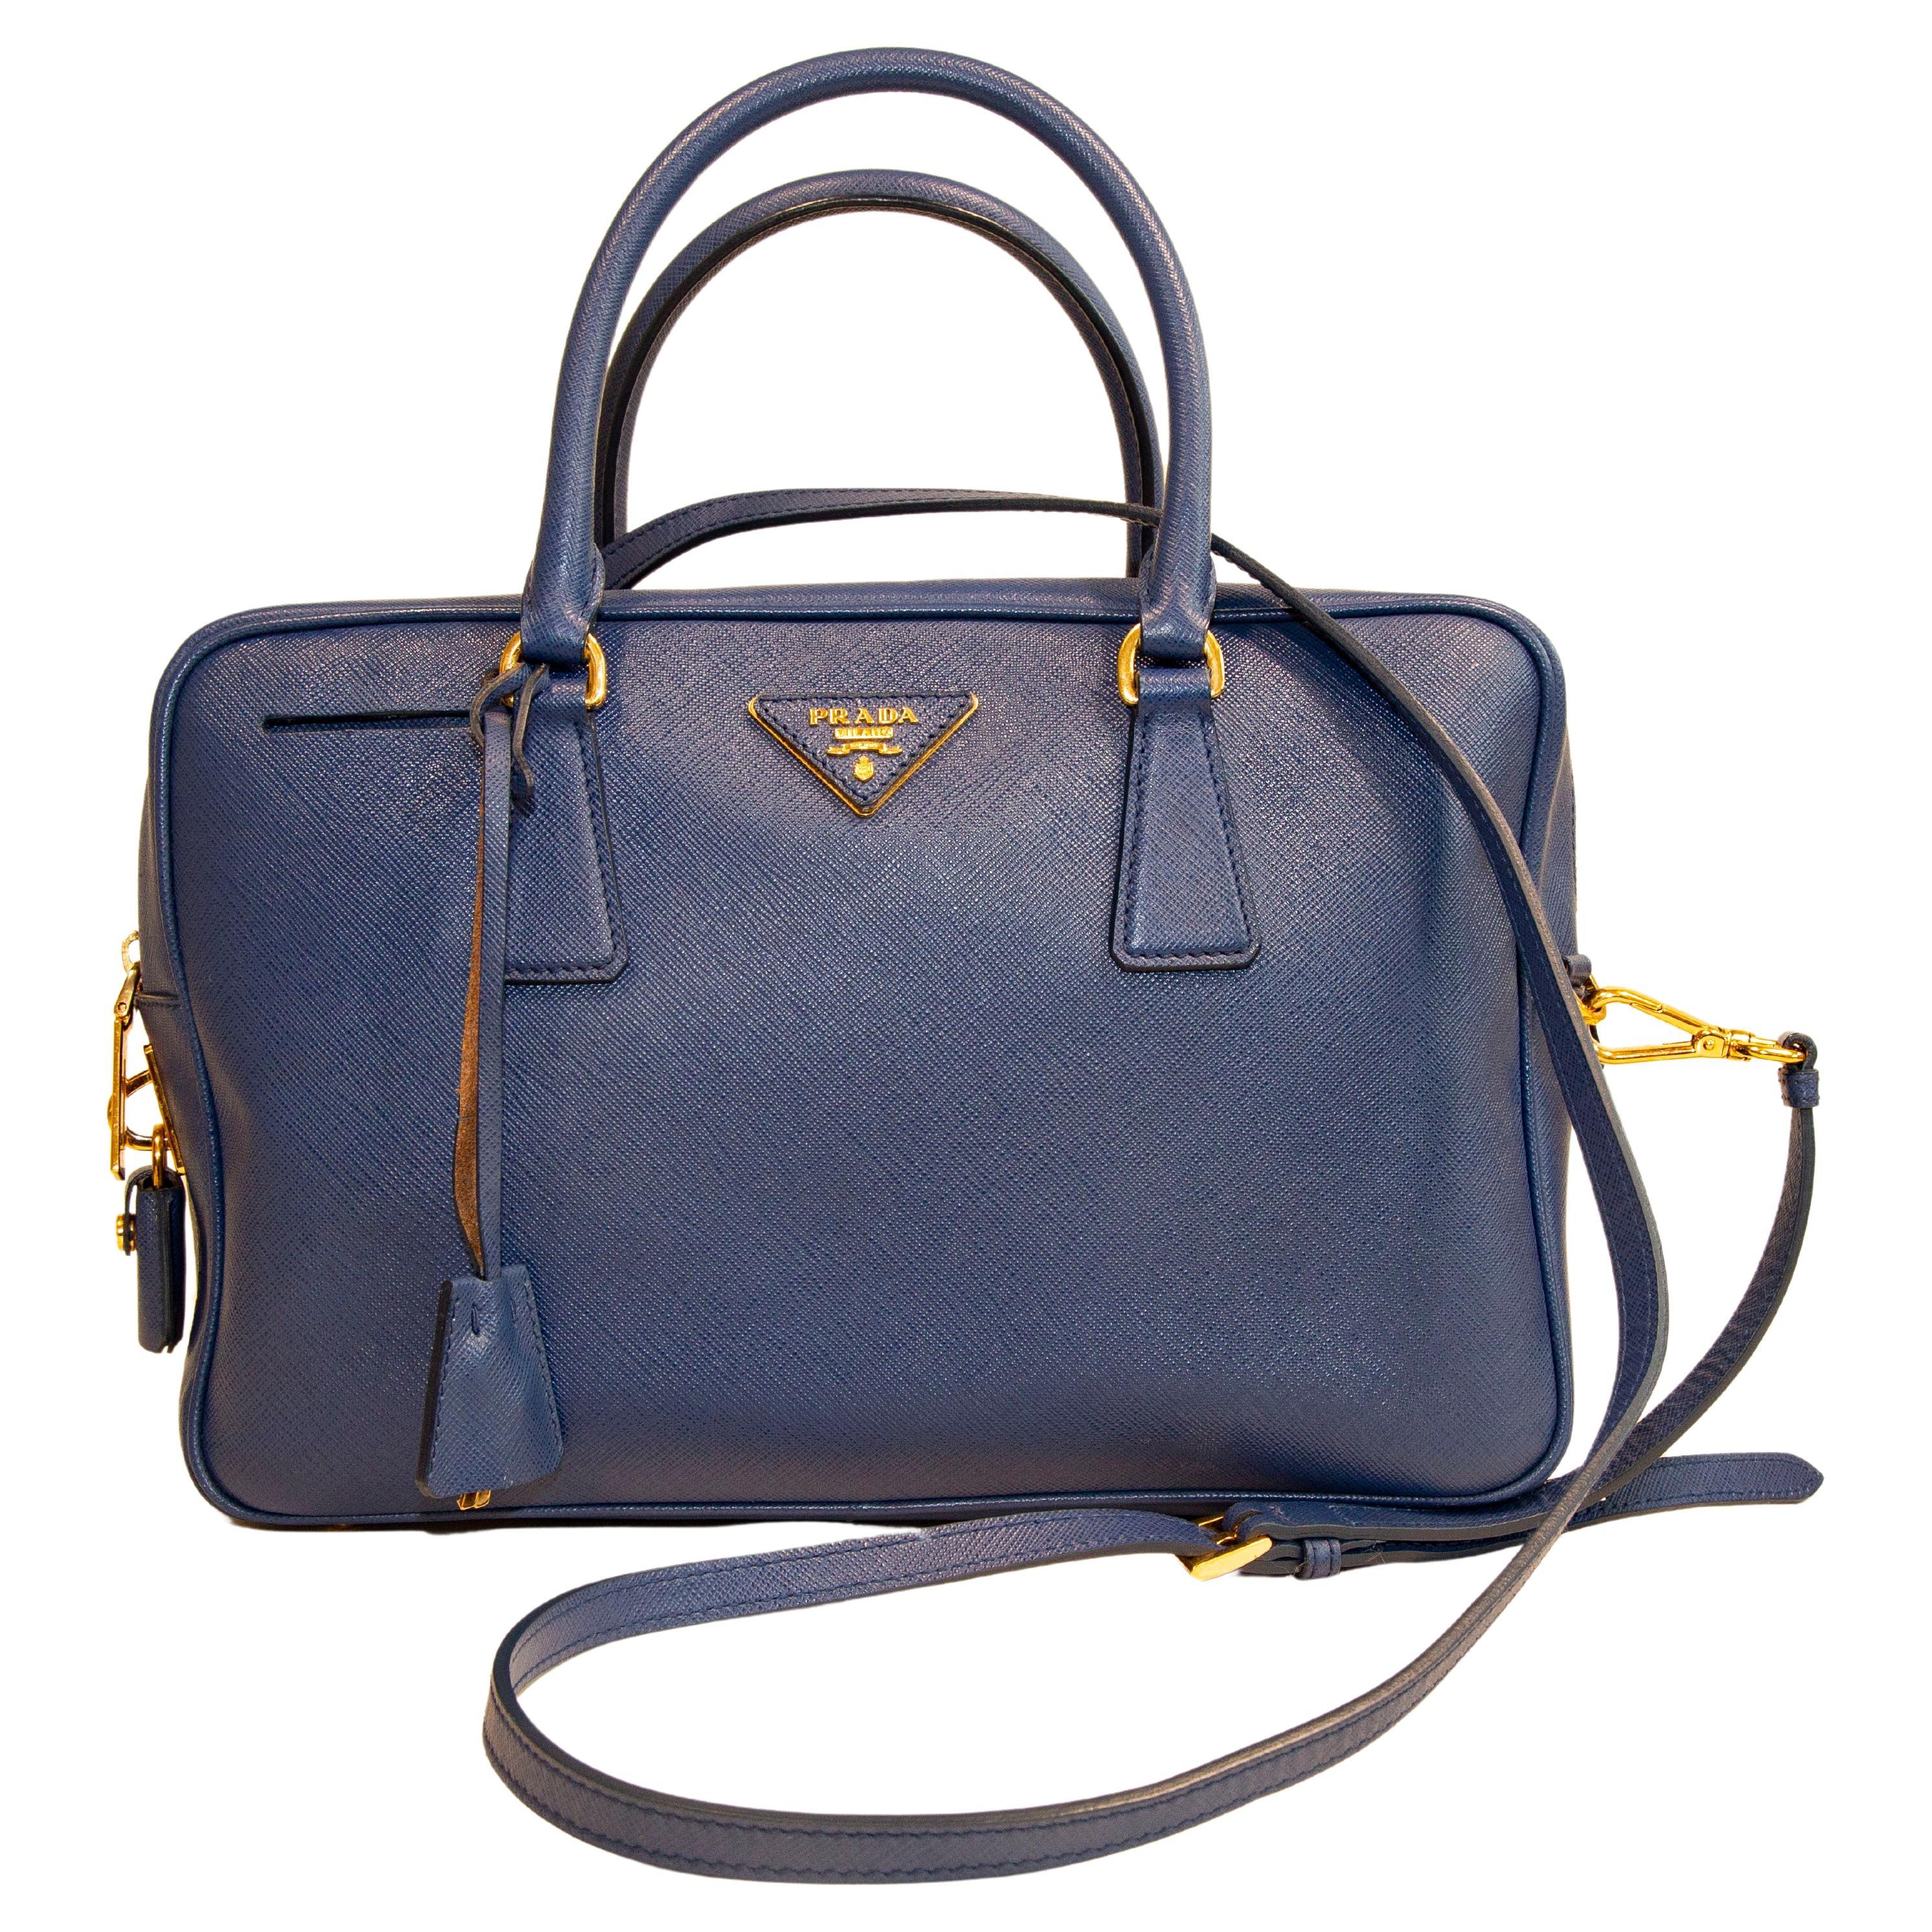  Prada Galleria Two Way Bag in Blue Saffiano Leather